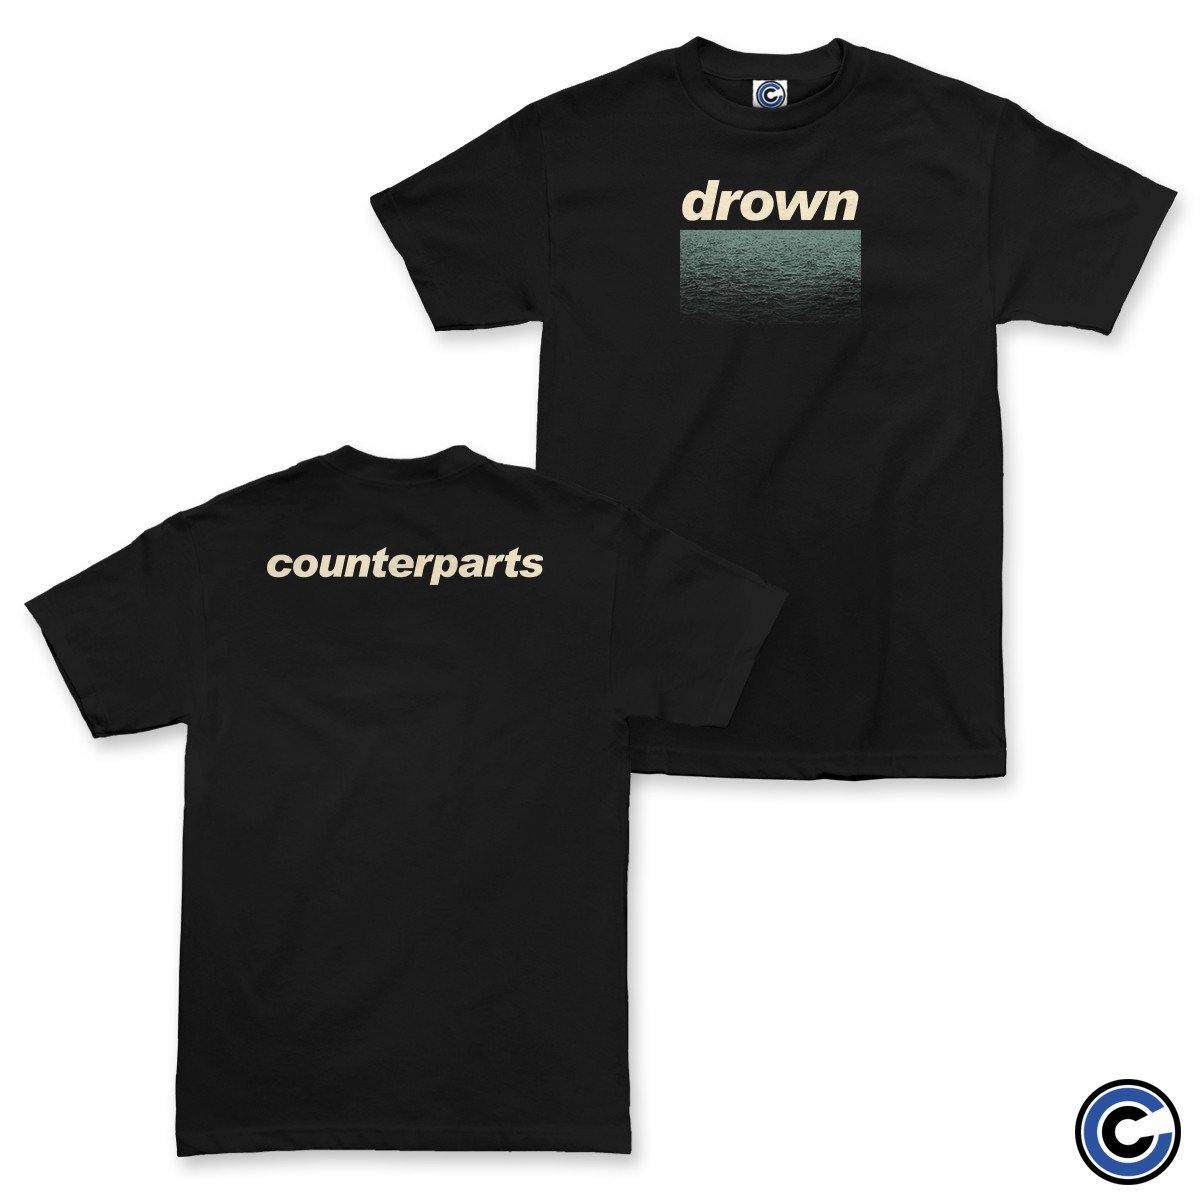 Buy – Counterparts "Drown" Shirt – Band & Music Merch – Cold Cuts Merch